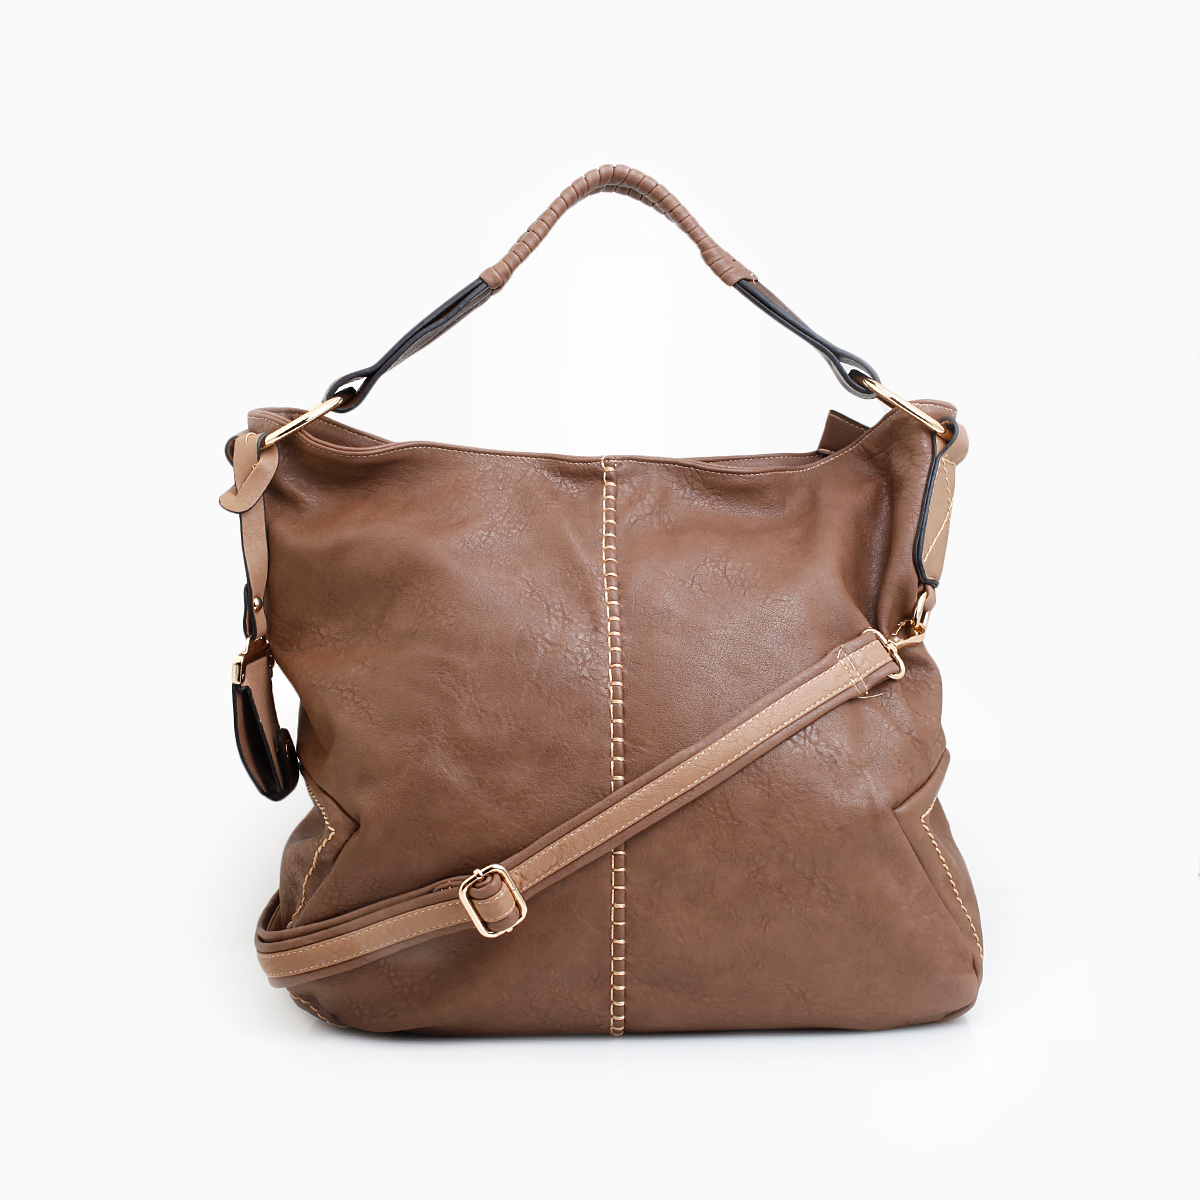 Center Stitch Trim Handbag in Khaki | DAILYLOOK